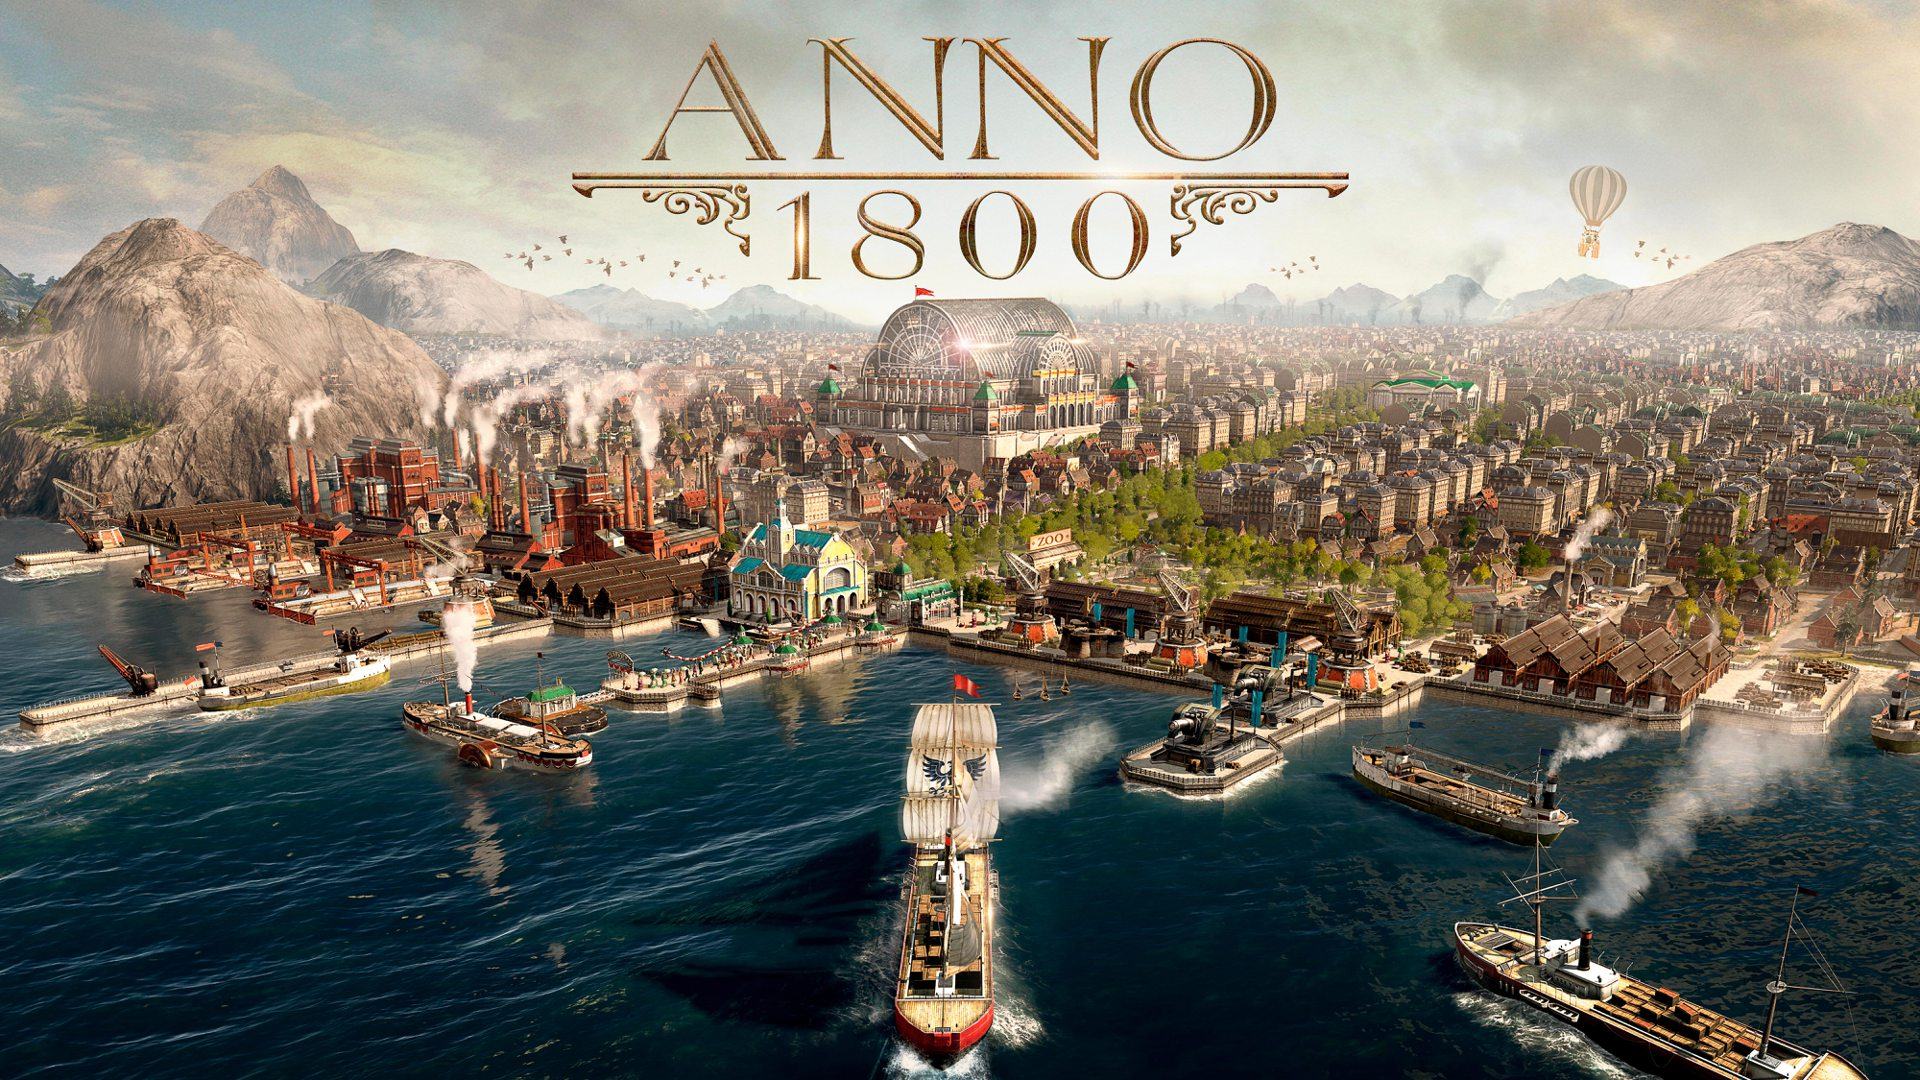 esclusiva Anno 1800 esclusiva Epic Games Store